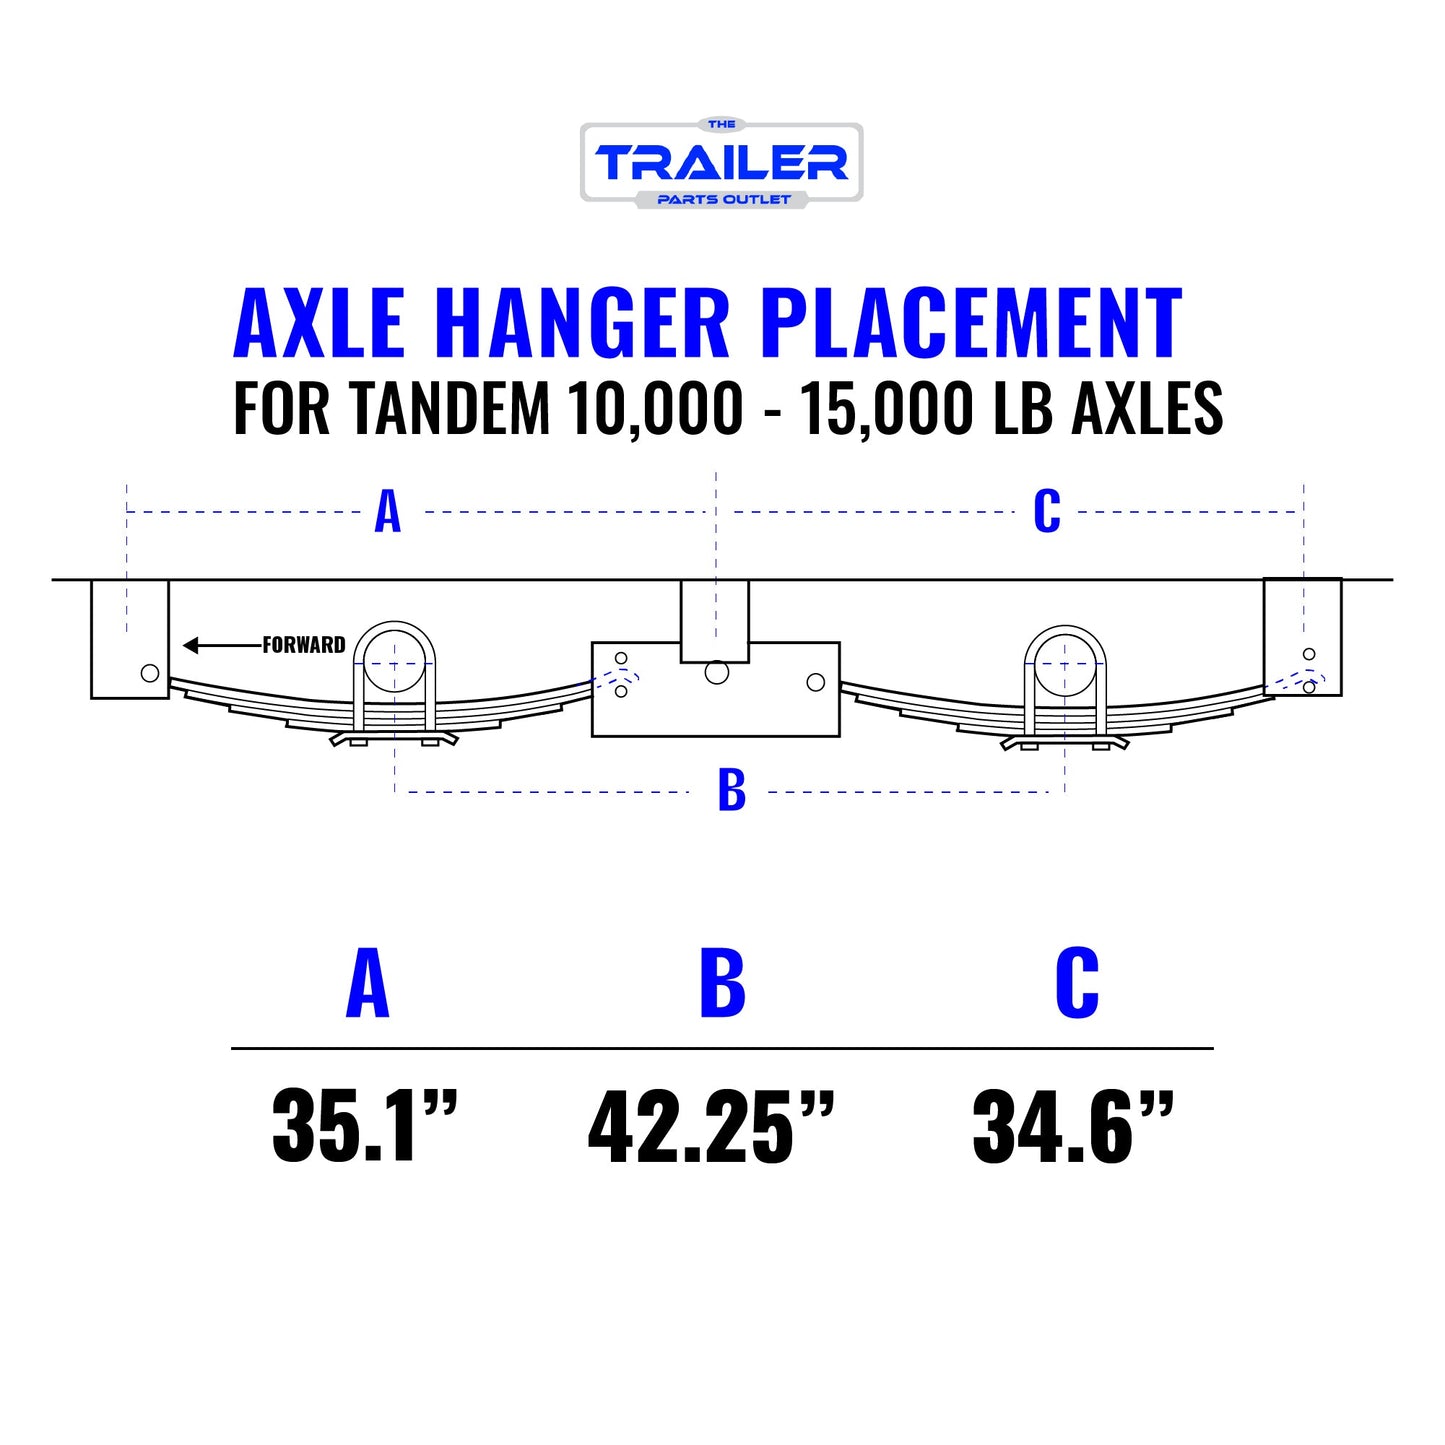 Kit de eje tándem Dexter de 10,000 lb - Muelles - Capacidad 20K (Serie de ejes) 